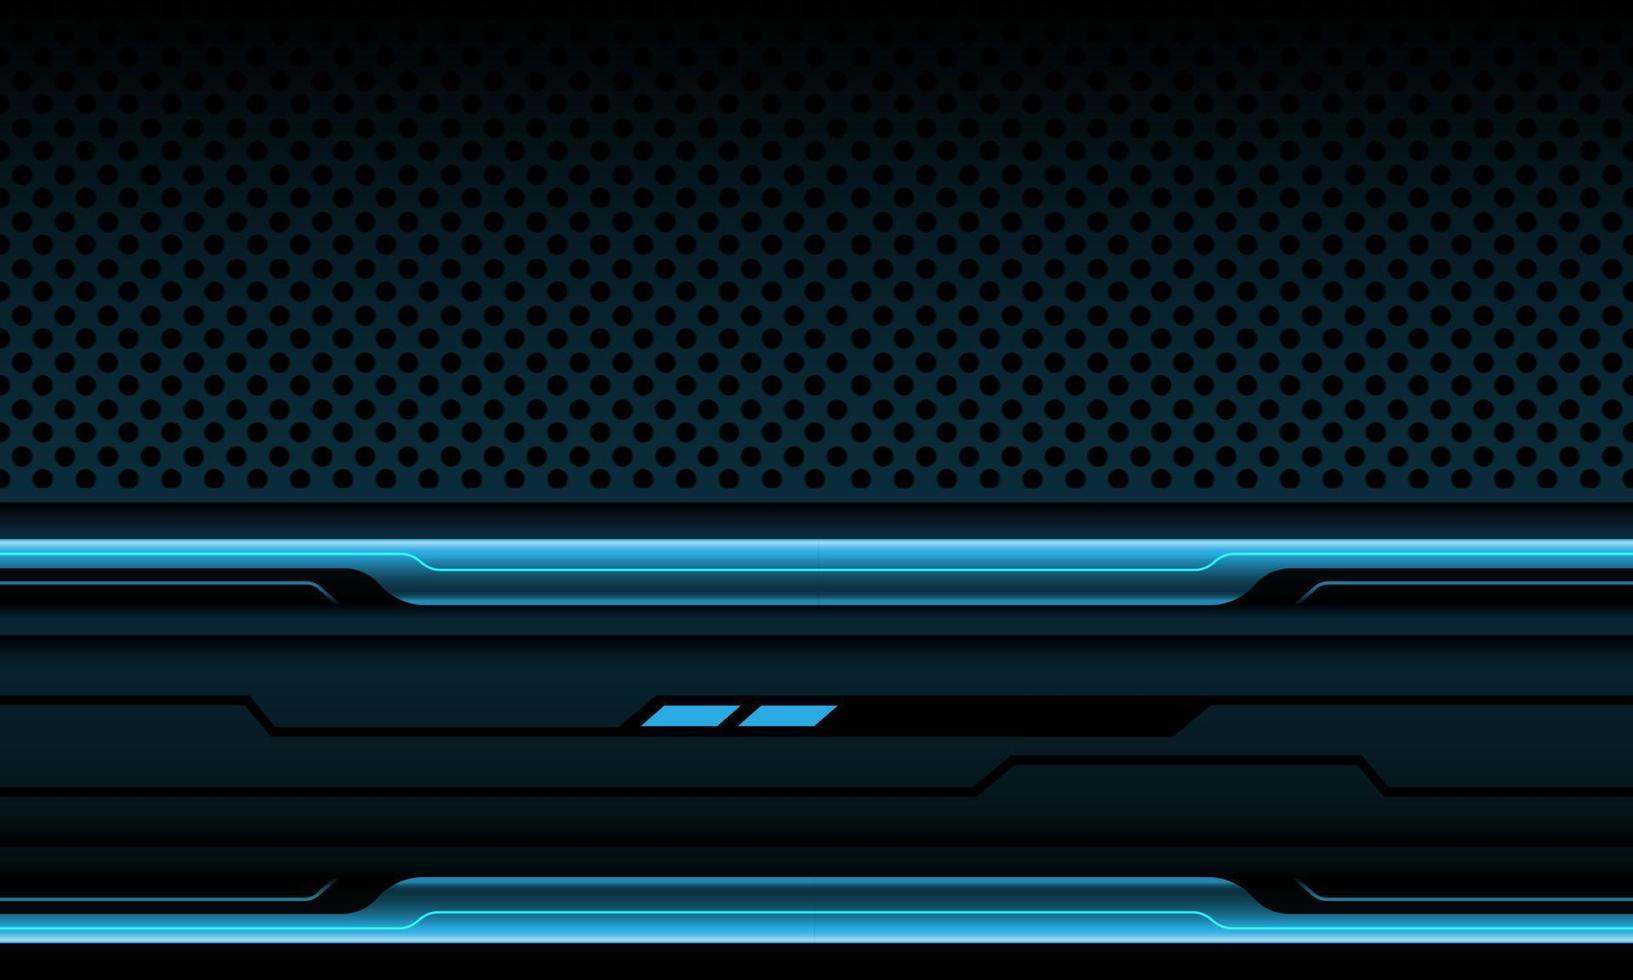 línea negra azul abstracta ciber geométrica en malla de círculo oscuro diseño metálico vector de fondo de tecnología futurista de lujo moderno